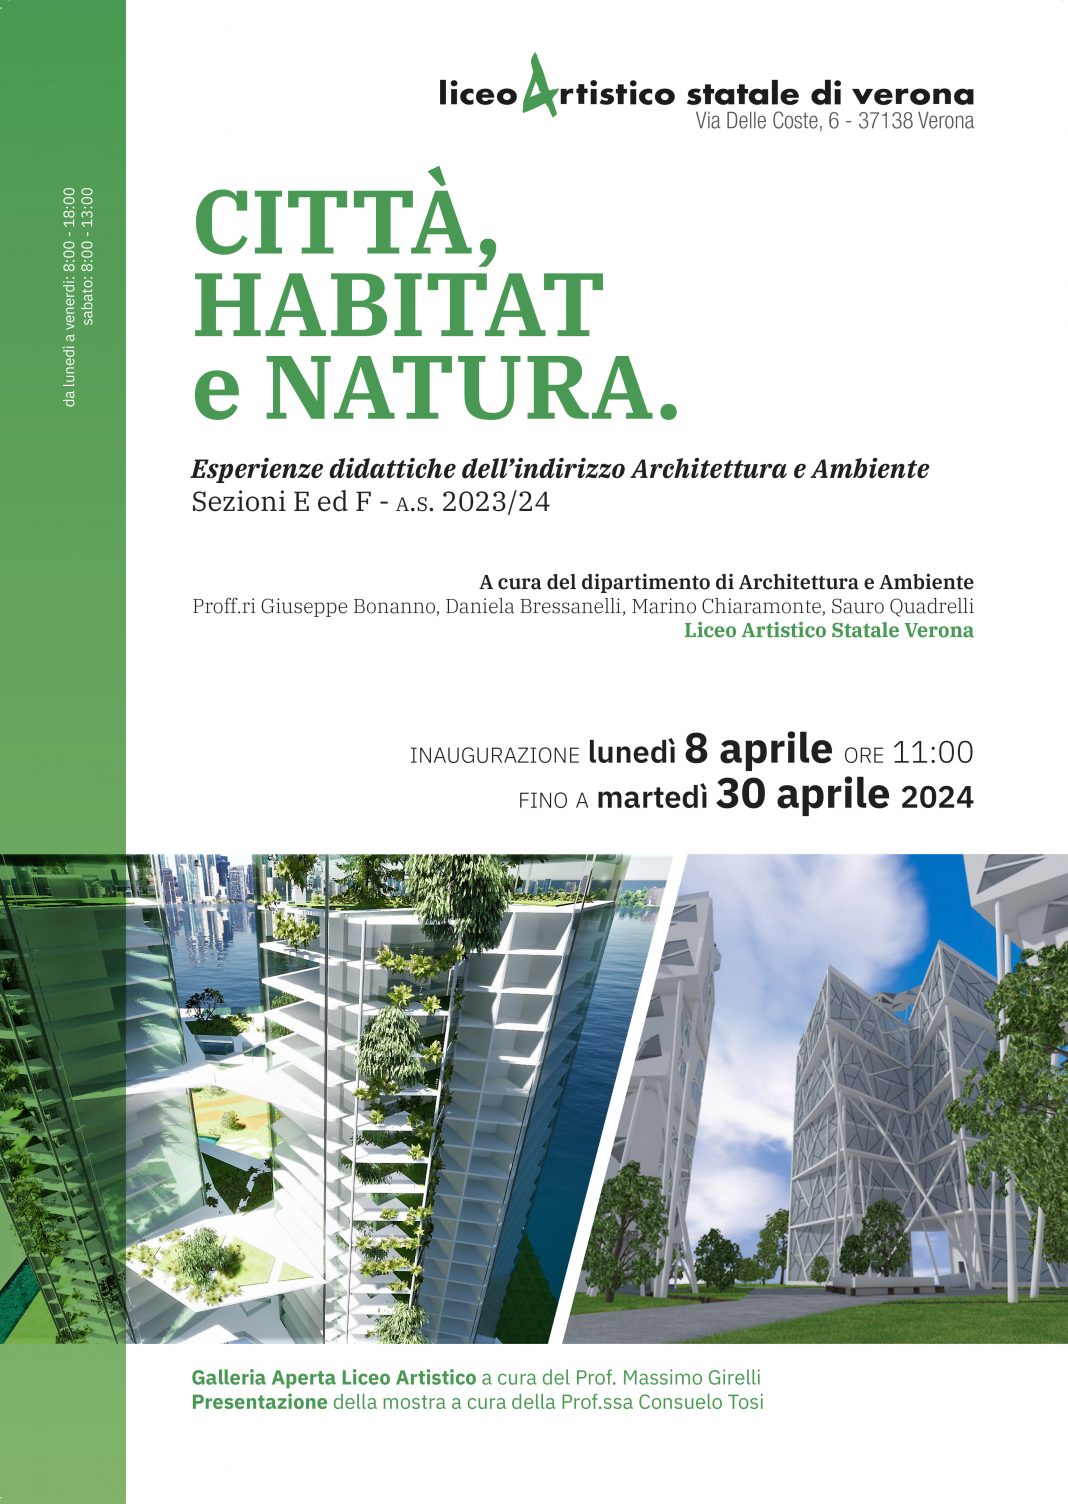 CITTÀ, HABITAT e NATURA.https://www.exibart.com/repository/media/formidable/11/img/1fa/Locandina-Città-Habitat-e-Natura-Galleria-Aperta-Liceo-Artistico-web-1068x1504.jpg